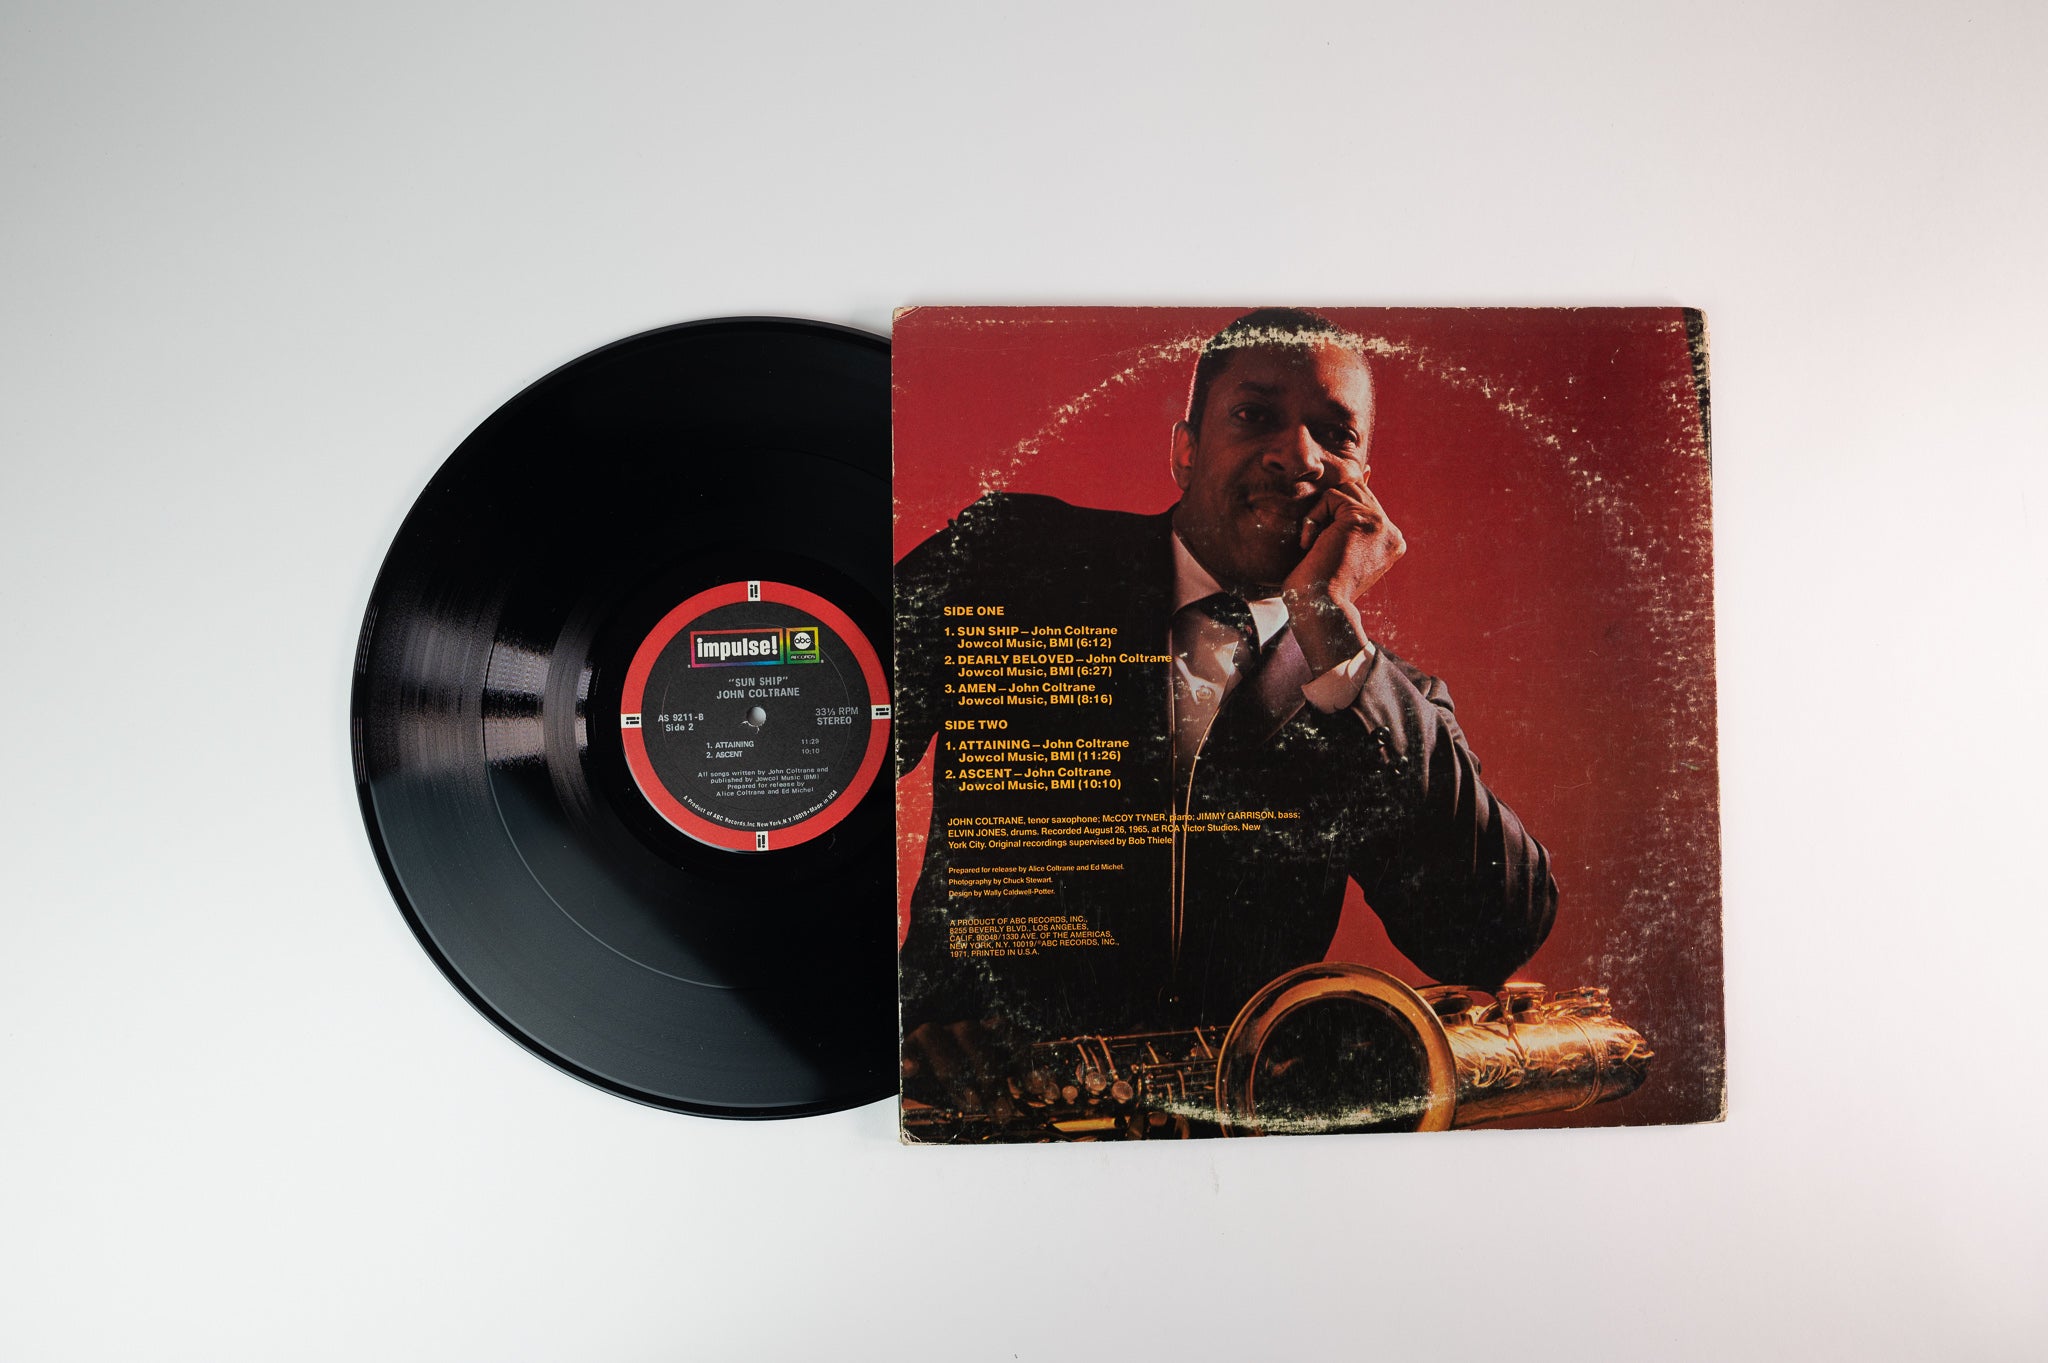 John Coltrane - Sun Ship on Impulse! Stereo 1971 Pressing